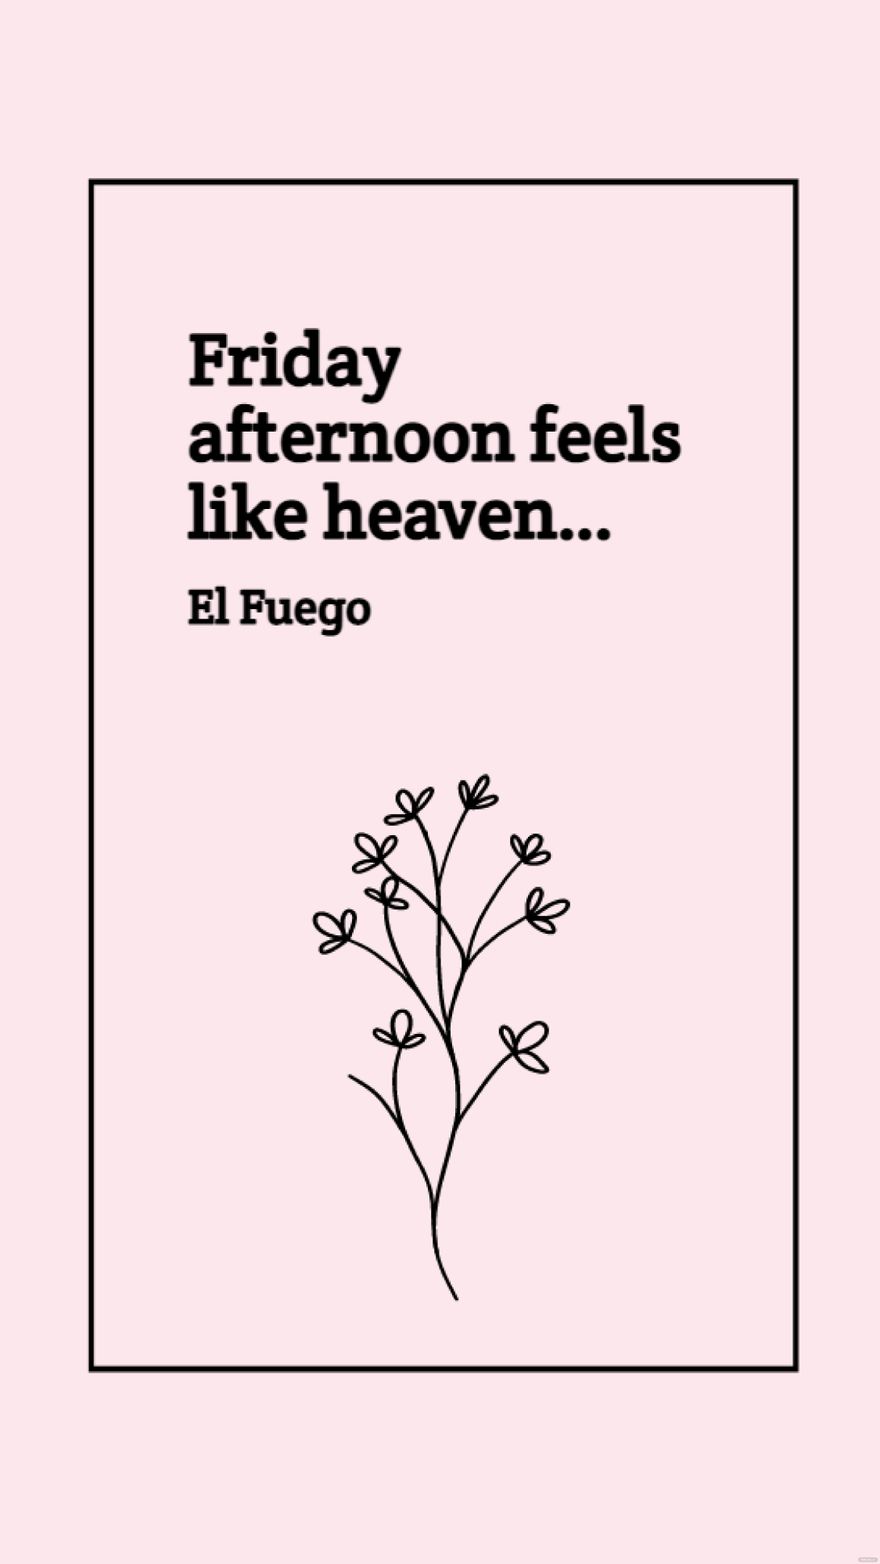 Free El Fuego - Friday afternoon feels like heaven…